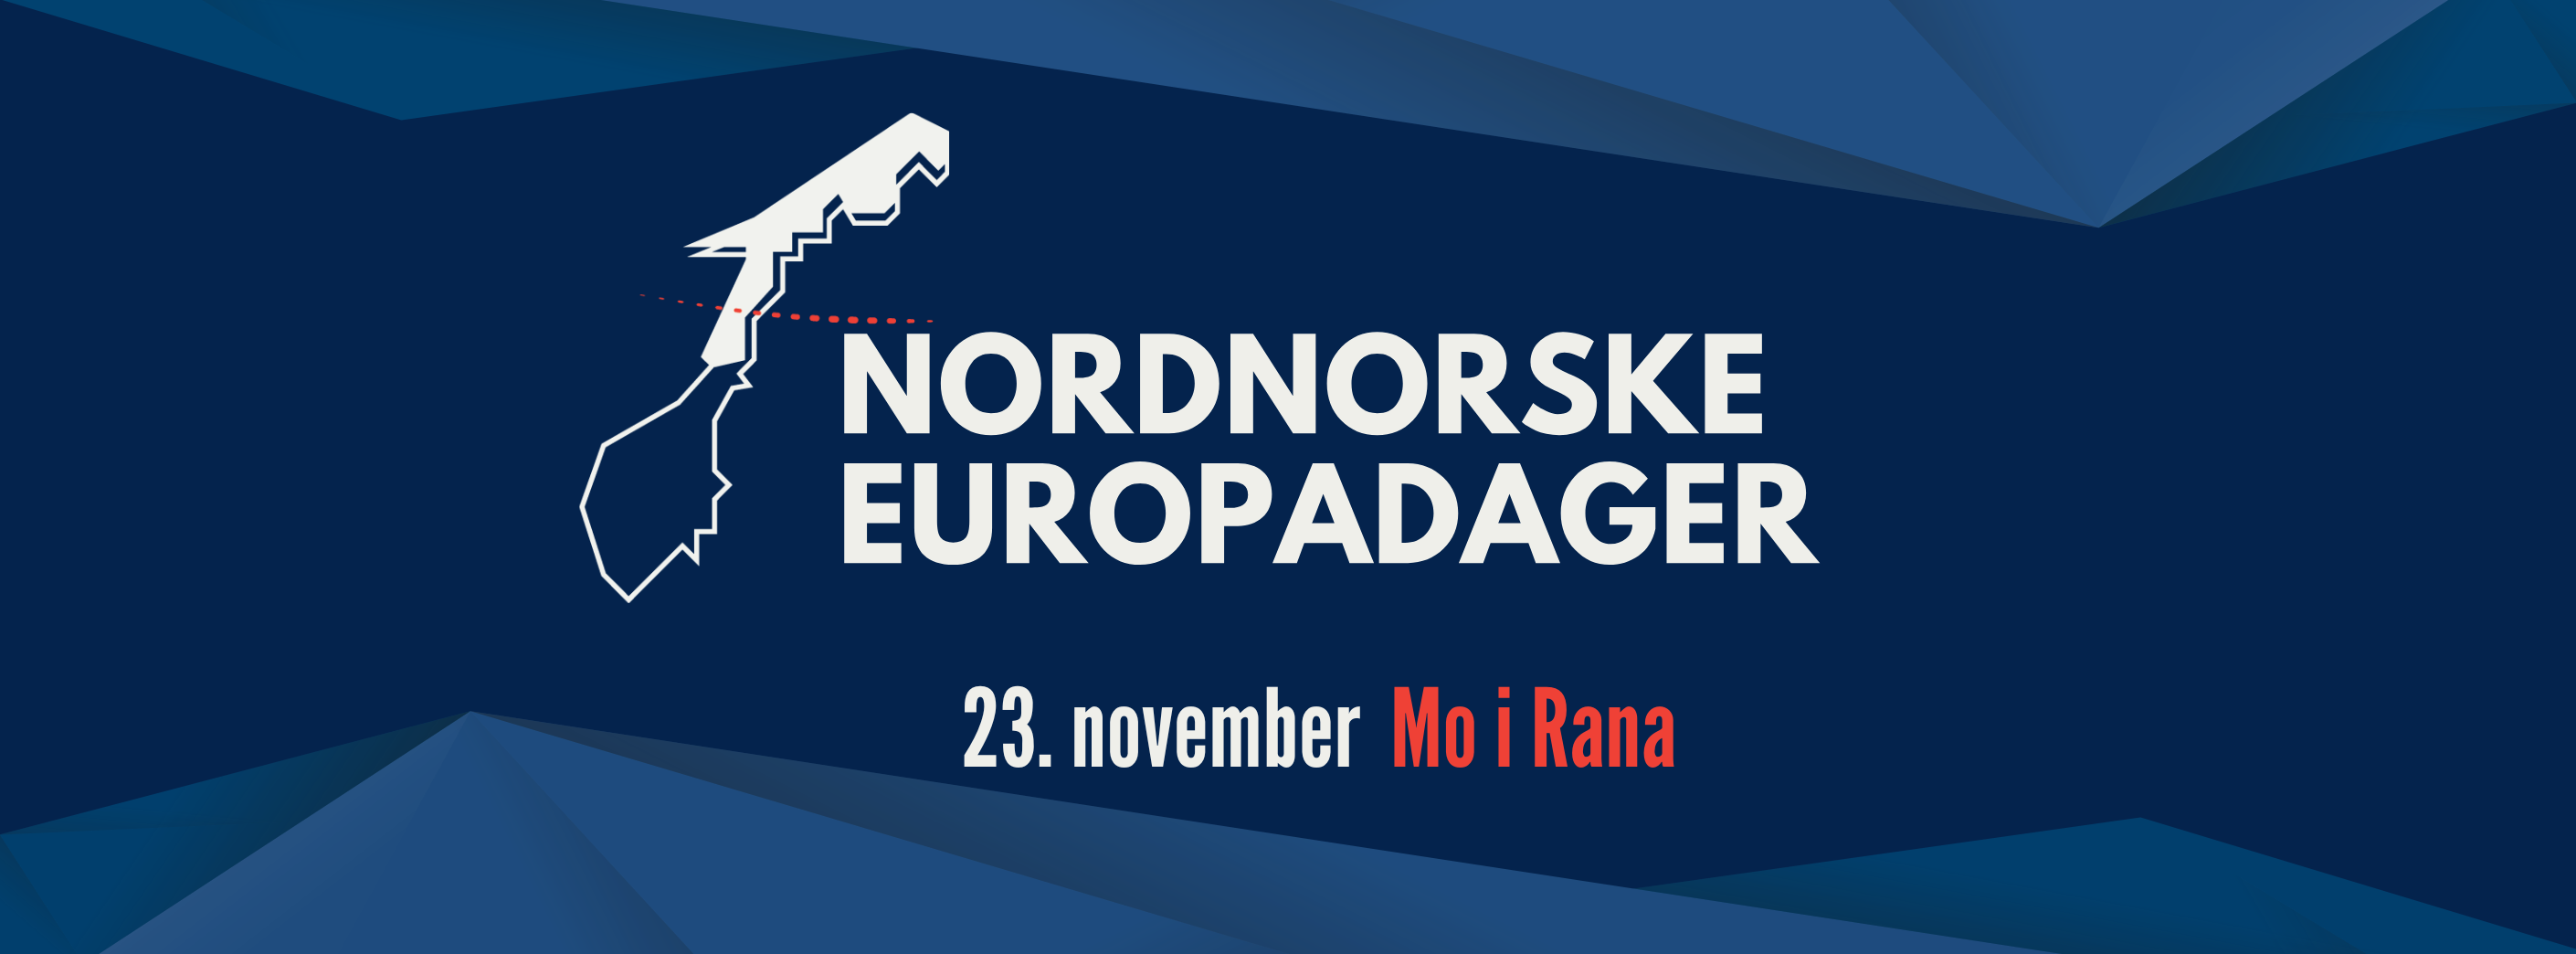 Nordnorske Europadager i Mo i Rana